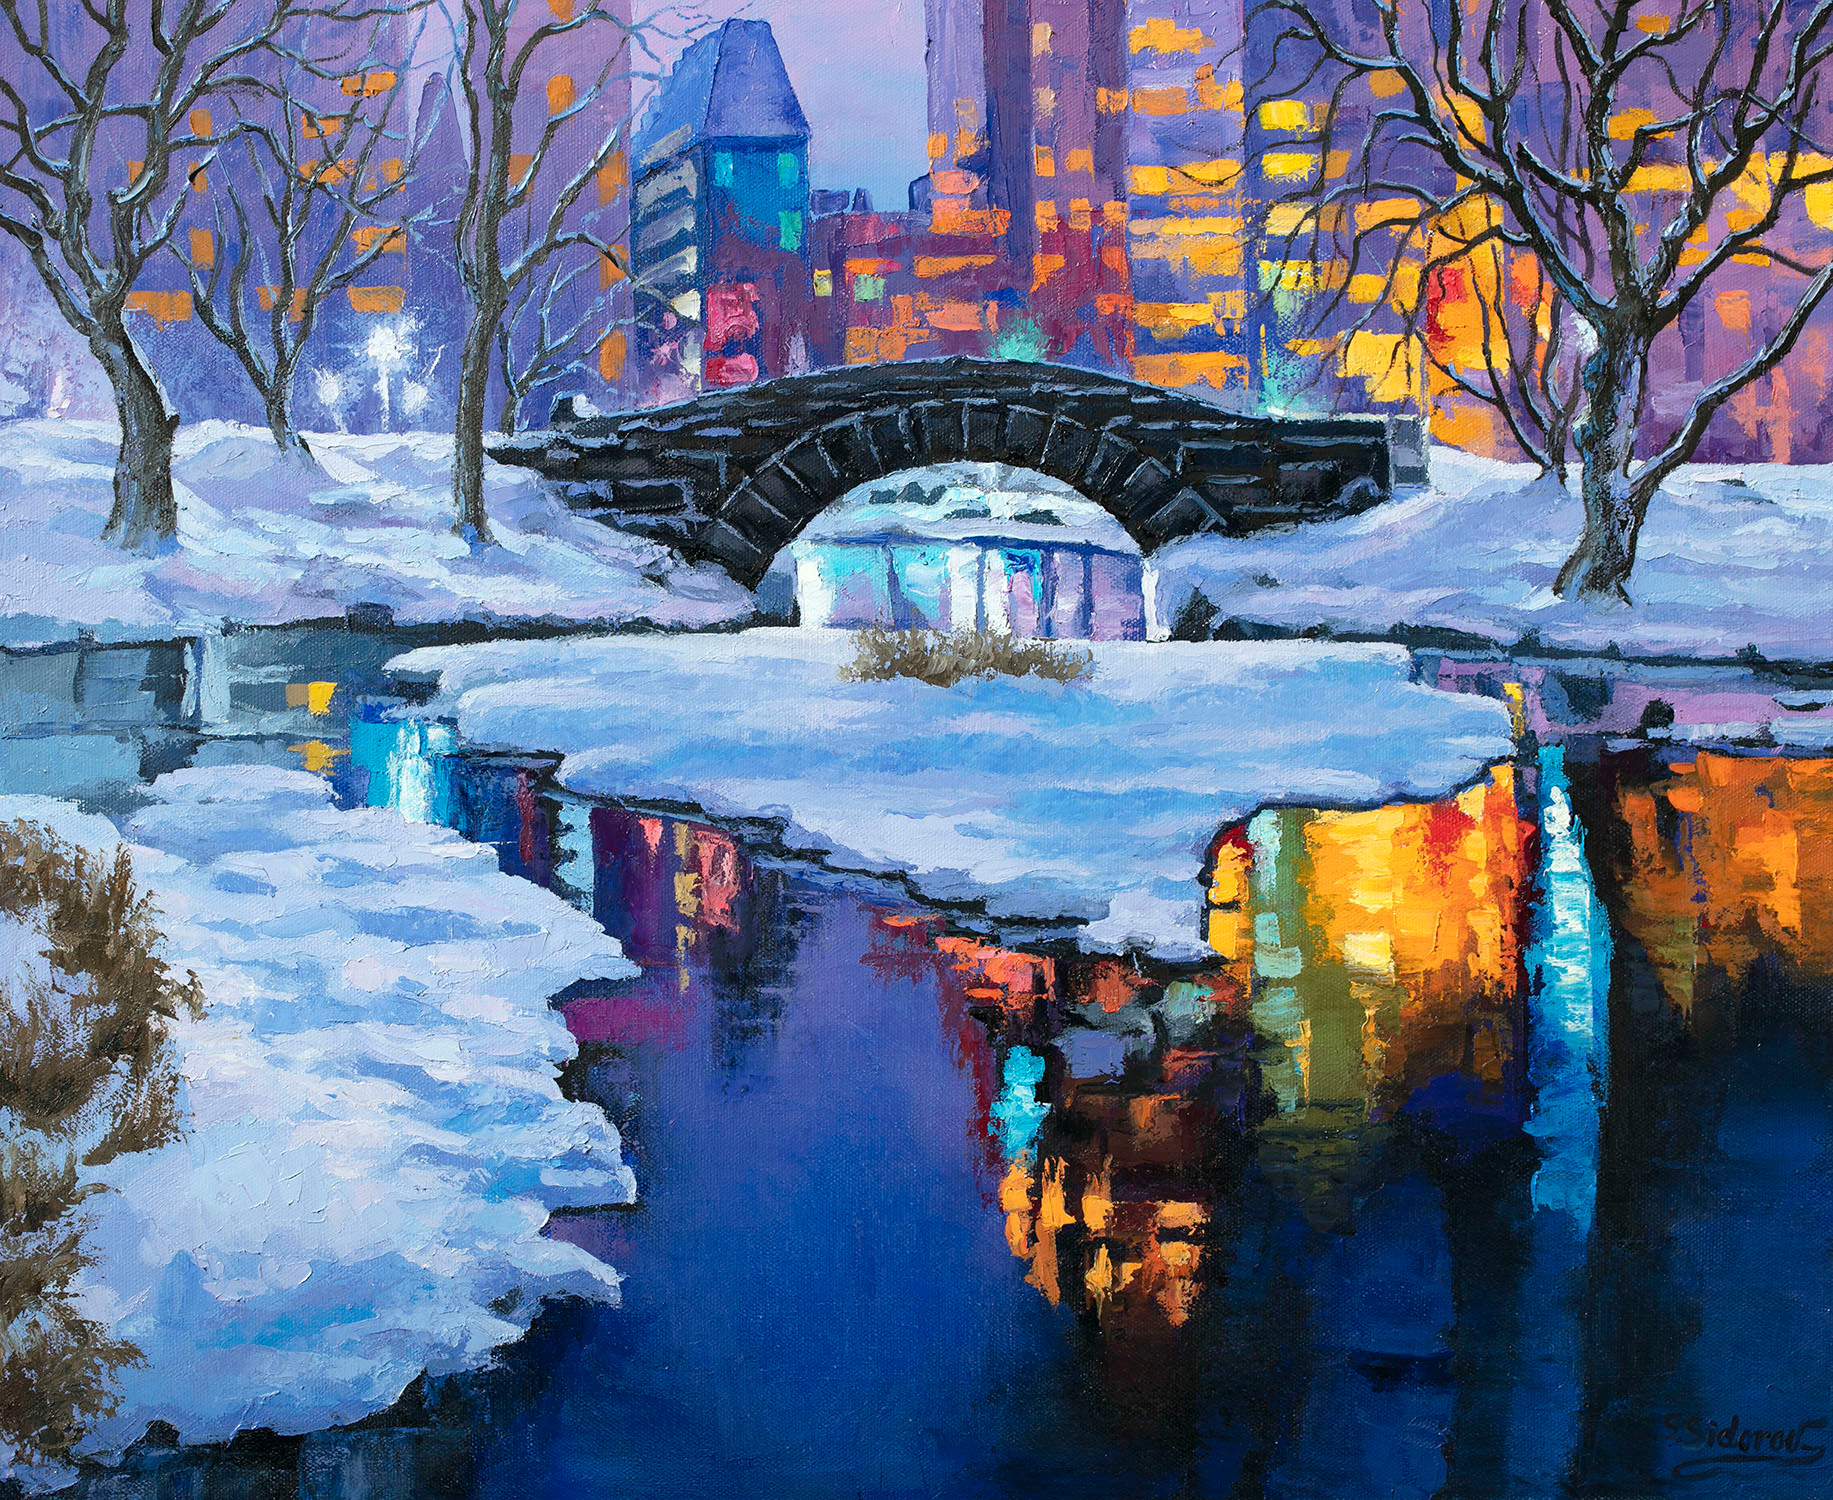 Magical winter night. gapstow bridge. central park. hgmx6u